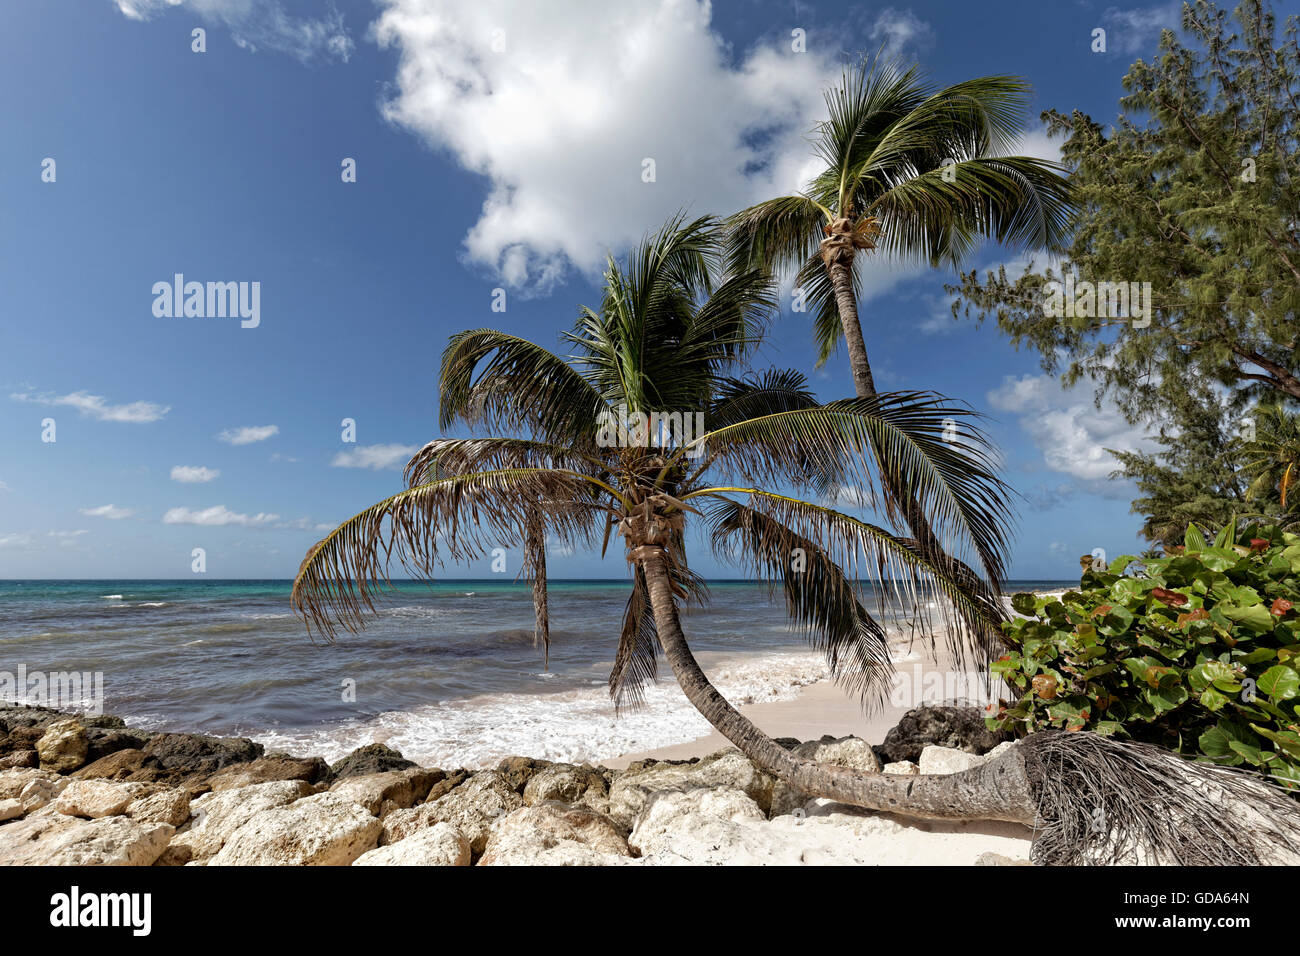 Palm Tree at the Beach, Caribbean Sea, Barbados Stock Photo